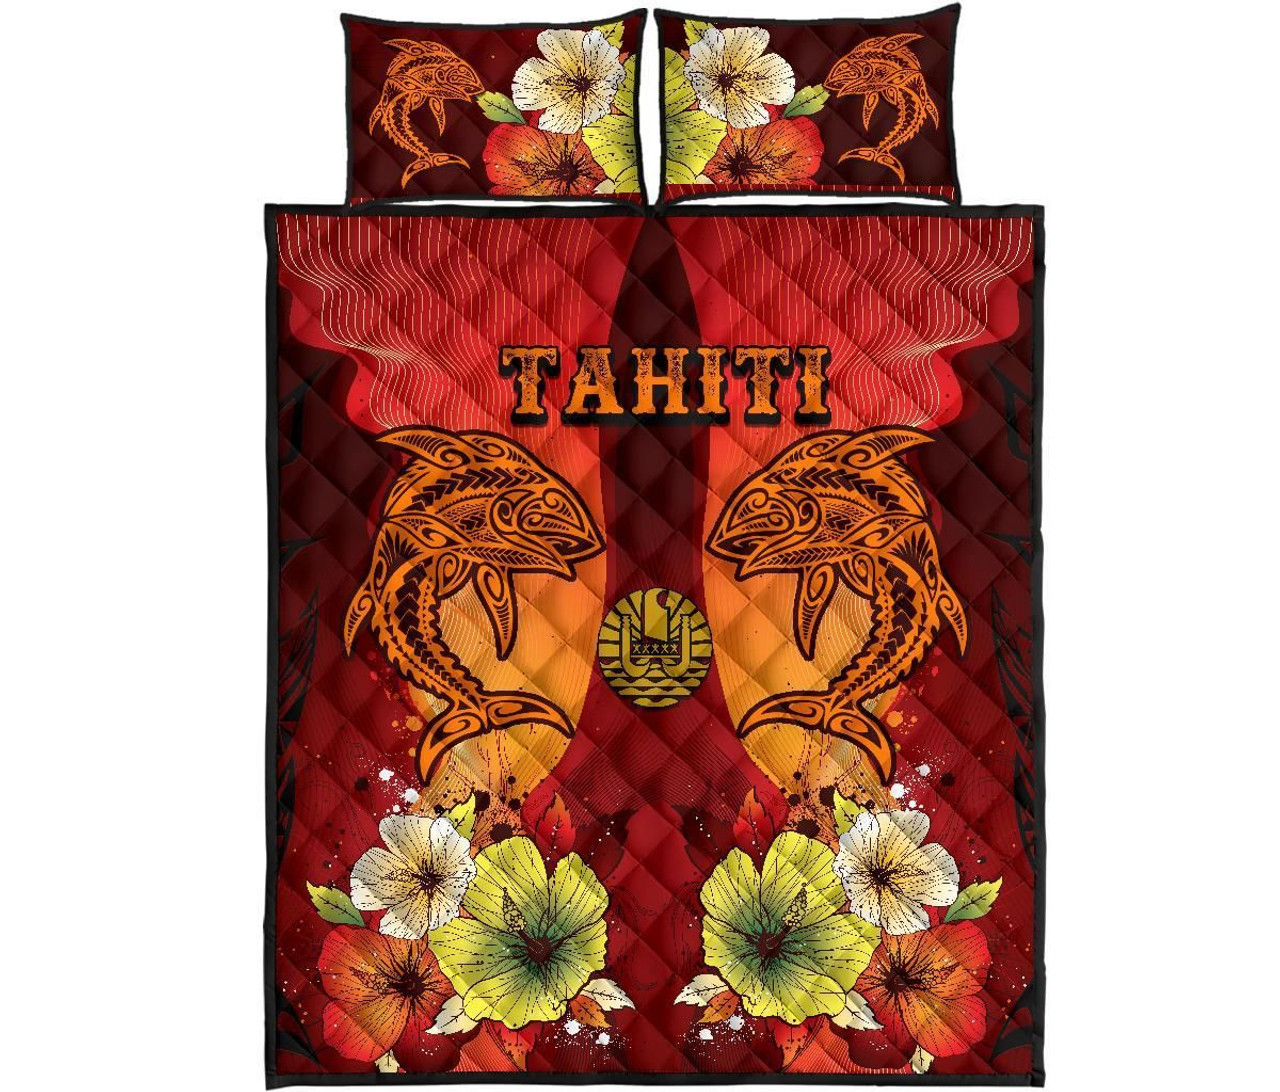 Tahiti Quilt Bed Sets - Tribal Tuna Fish 2